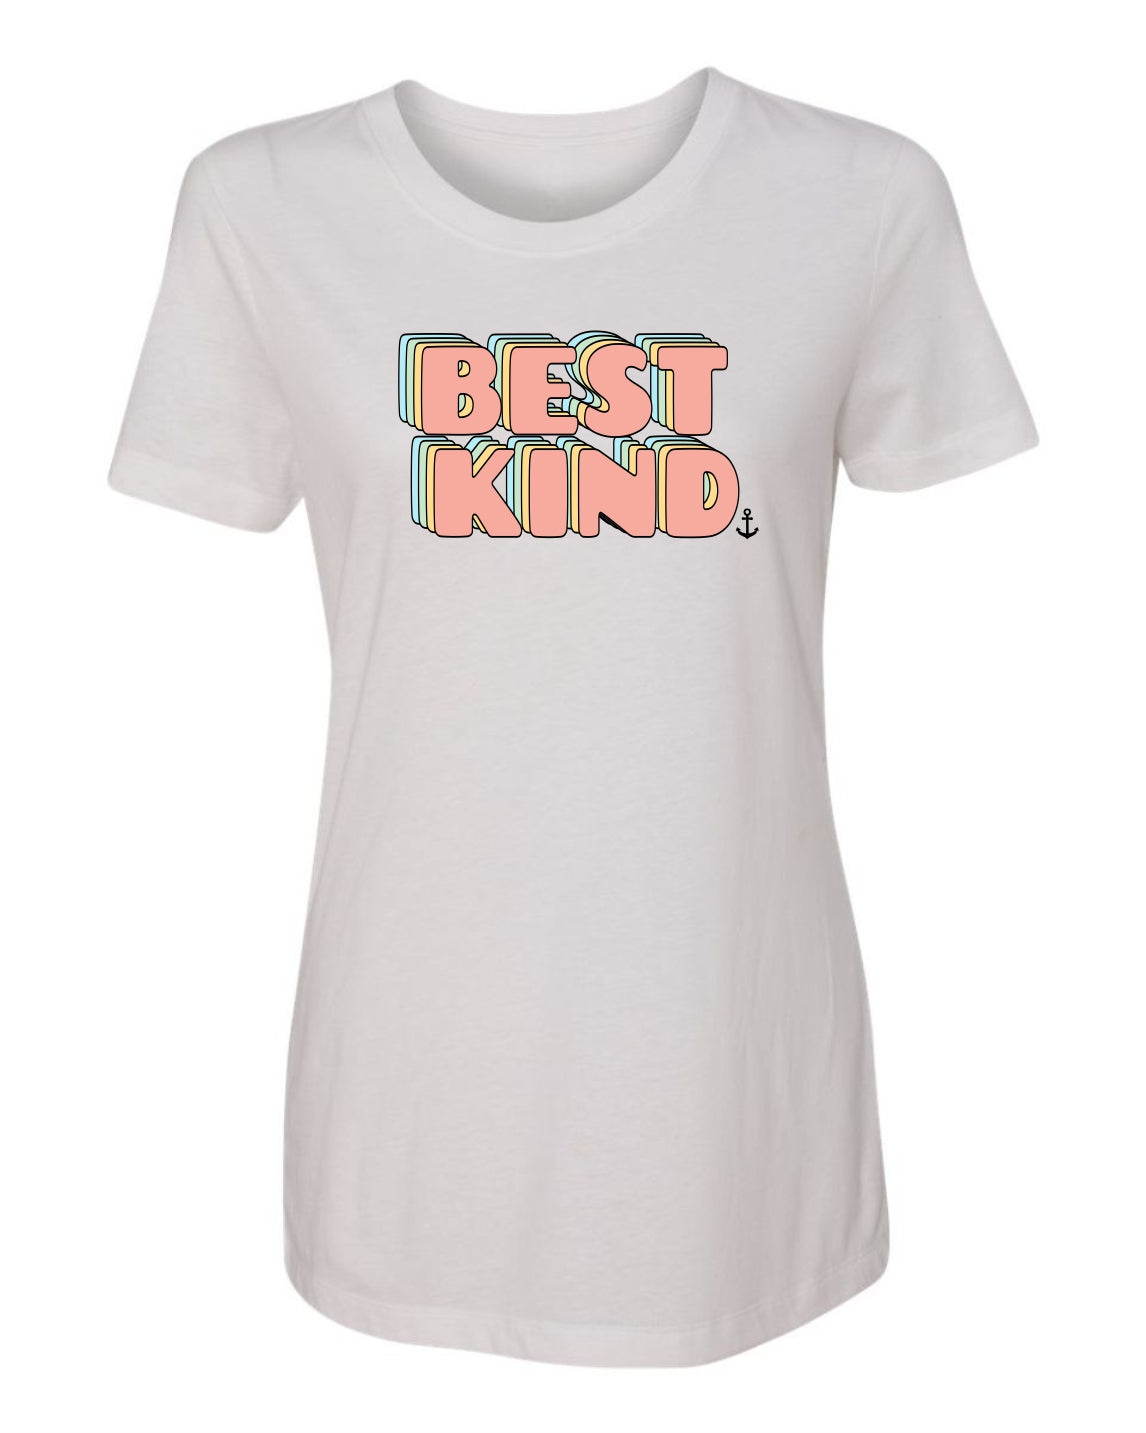 "Best Kind" Groovy T-Shirt